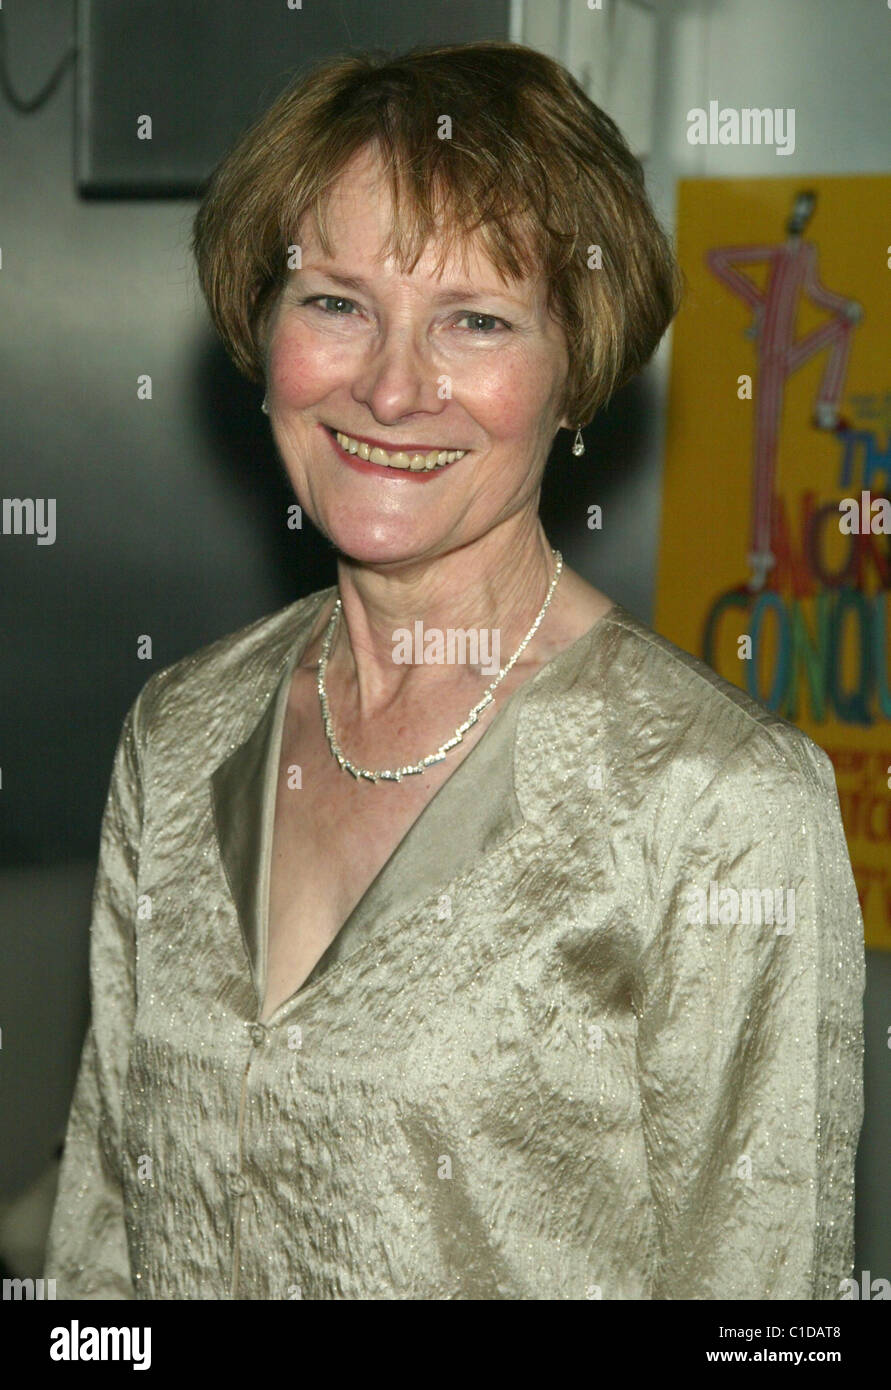 Frau Alan Ayckbourn Opening Night After Party für das Broadway-Stück "The Norman Conquests" in Arena statt.  New York City, USA Stockfoto